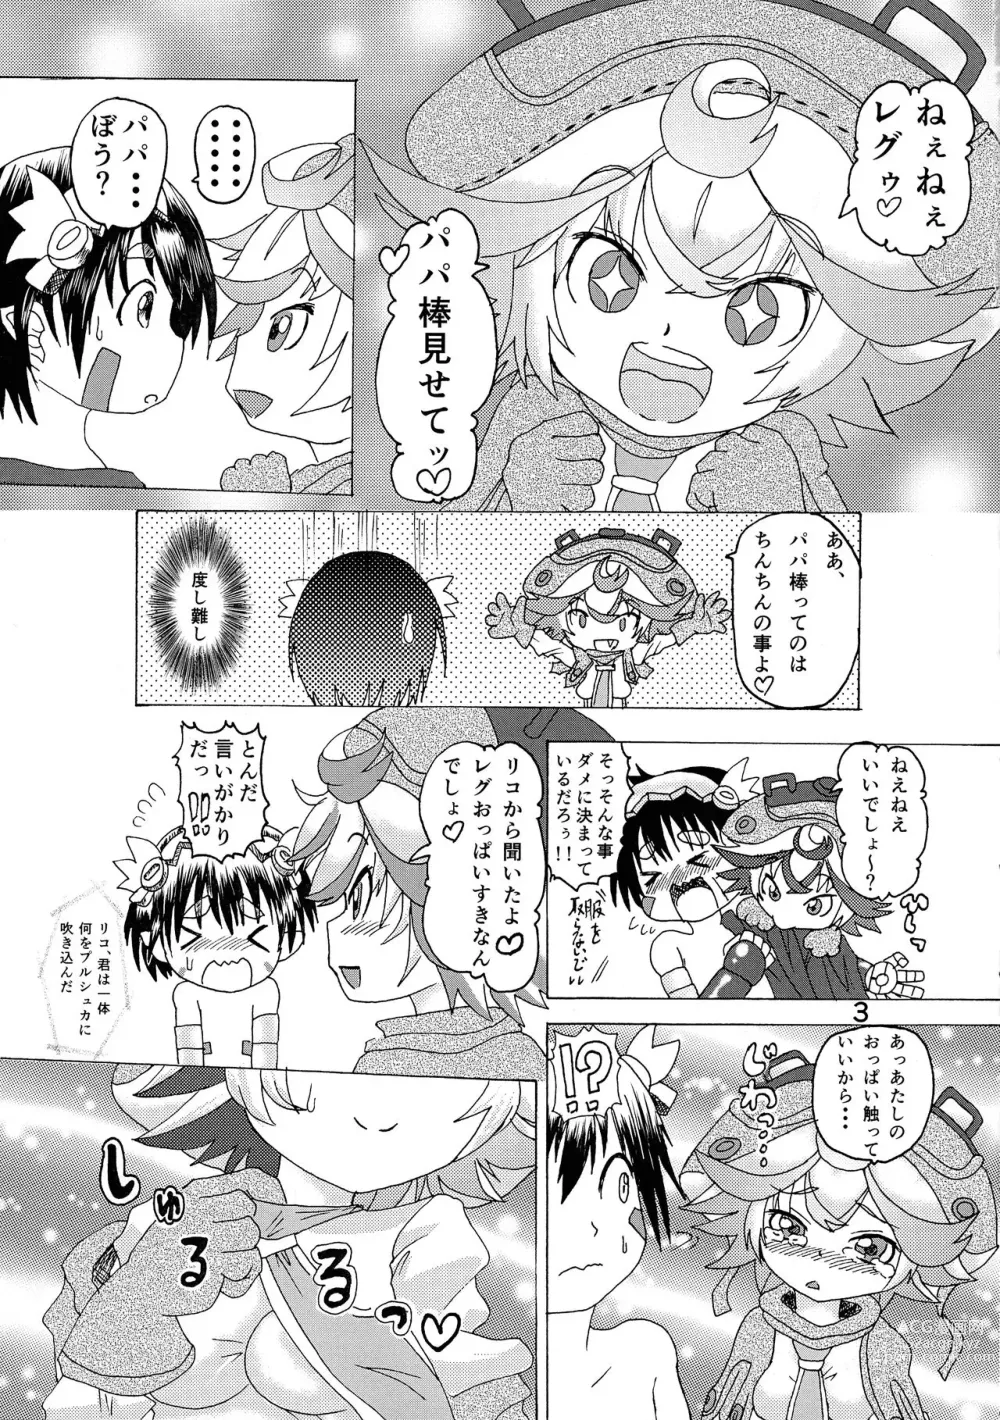 Page 3 of doujinshi SHT45